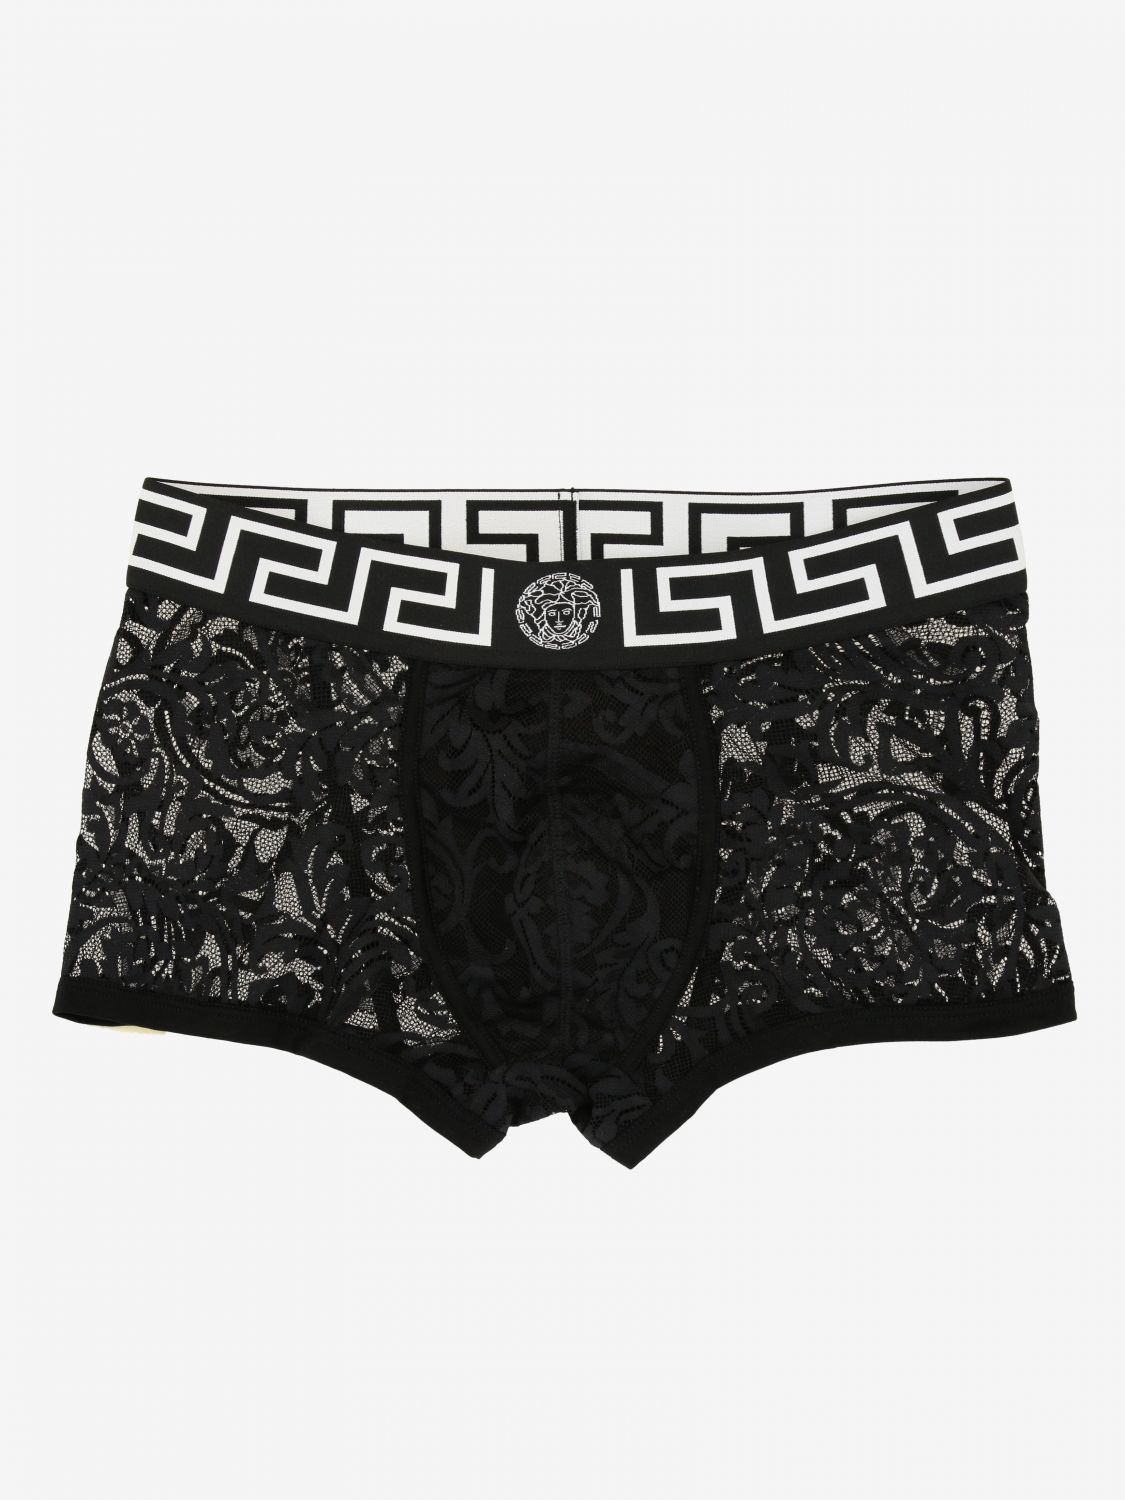 Versace Outlet: lace briefs | Underwear 